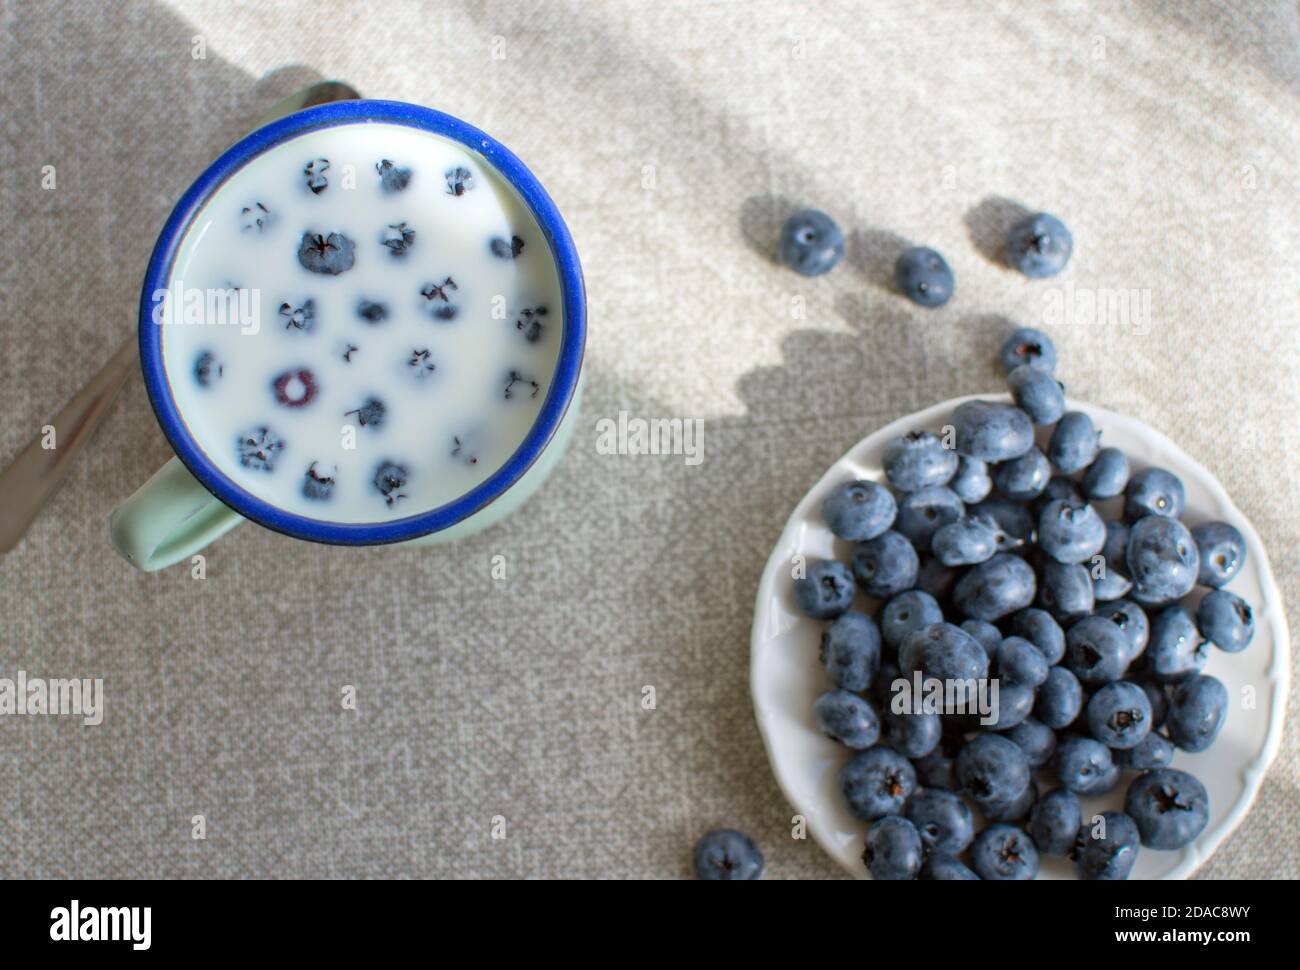 Enamel mug with milk and blueberries Stock Photo